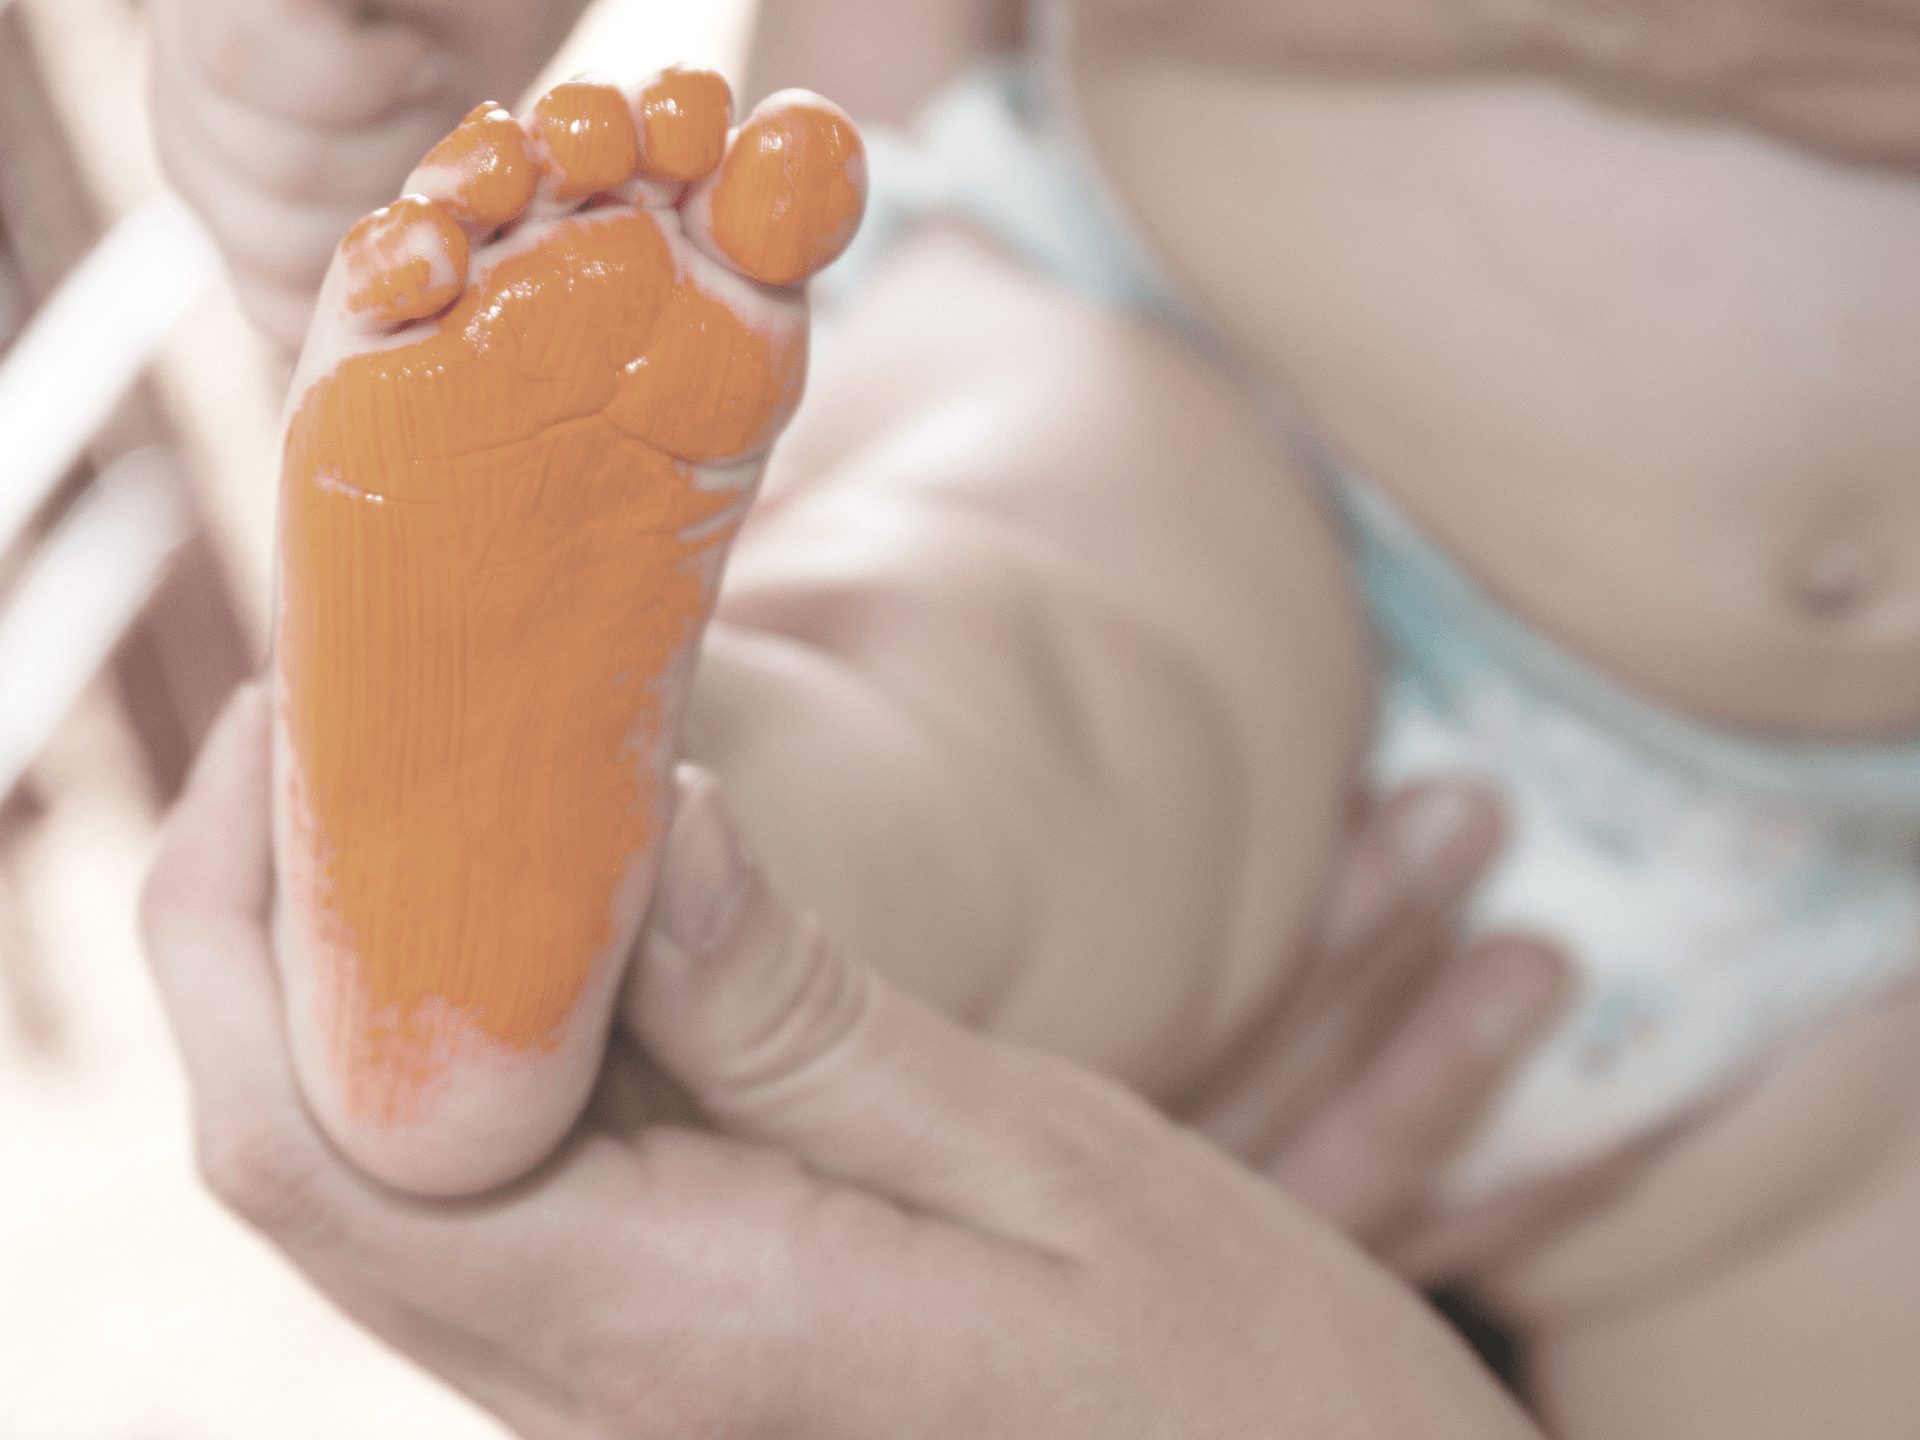 baby footprints and handprints tattoos